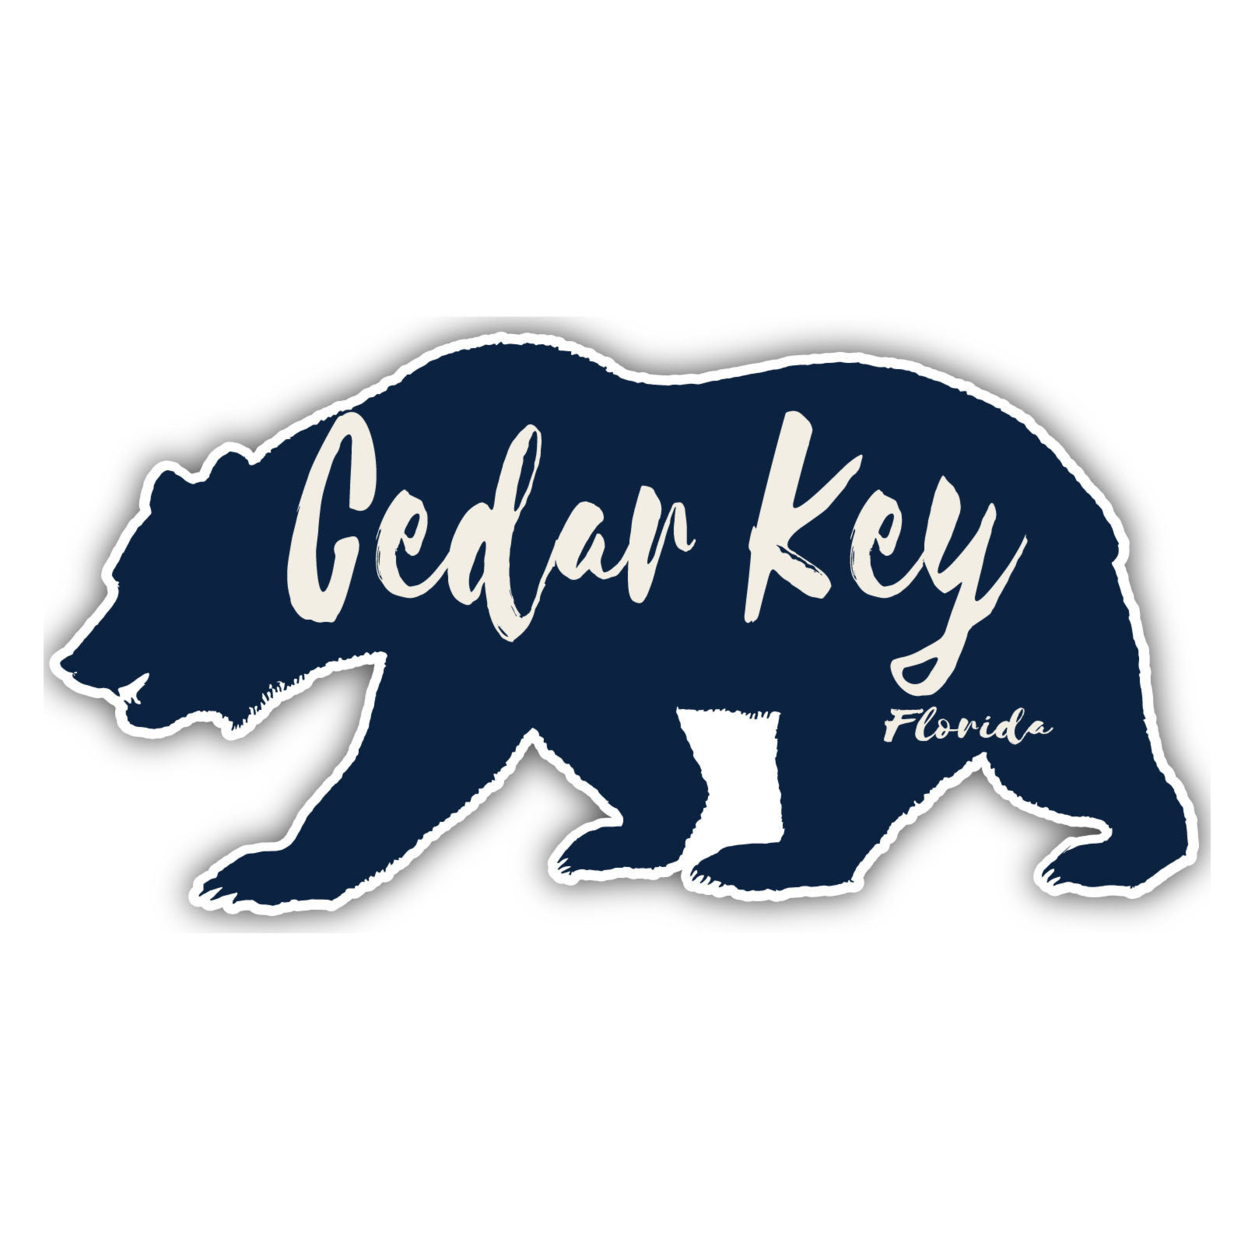 Cedar Key Florida Souvenir Decorative Stickers (Choose Theme And Size) - 4-Pack, 10-Inch, Tent